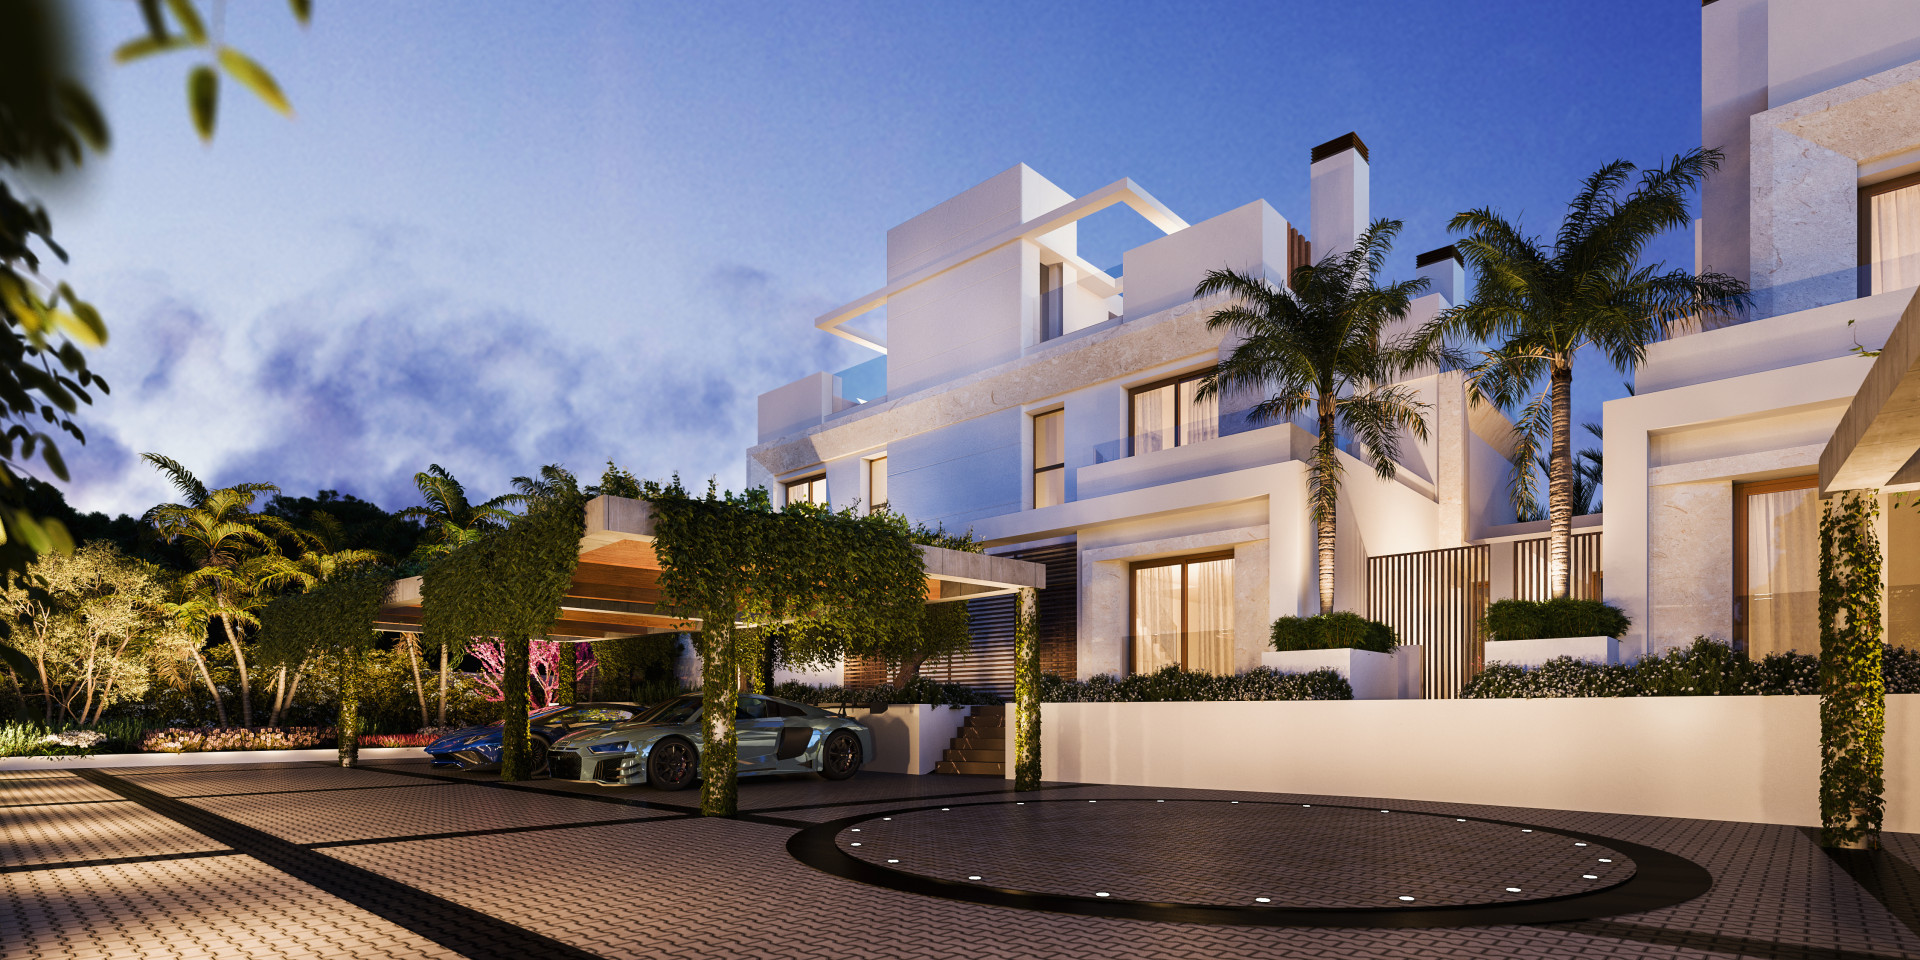 Marbella: The Costa del Sol's Jet-Set Playground - Christie's International  Real Estate